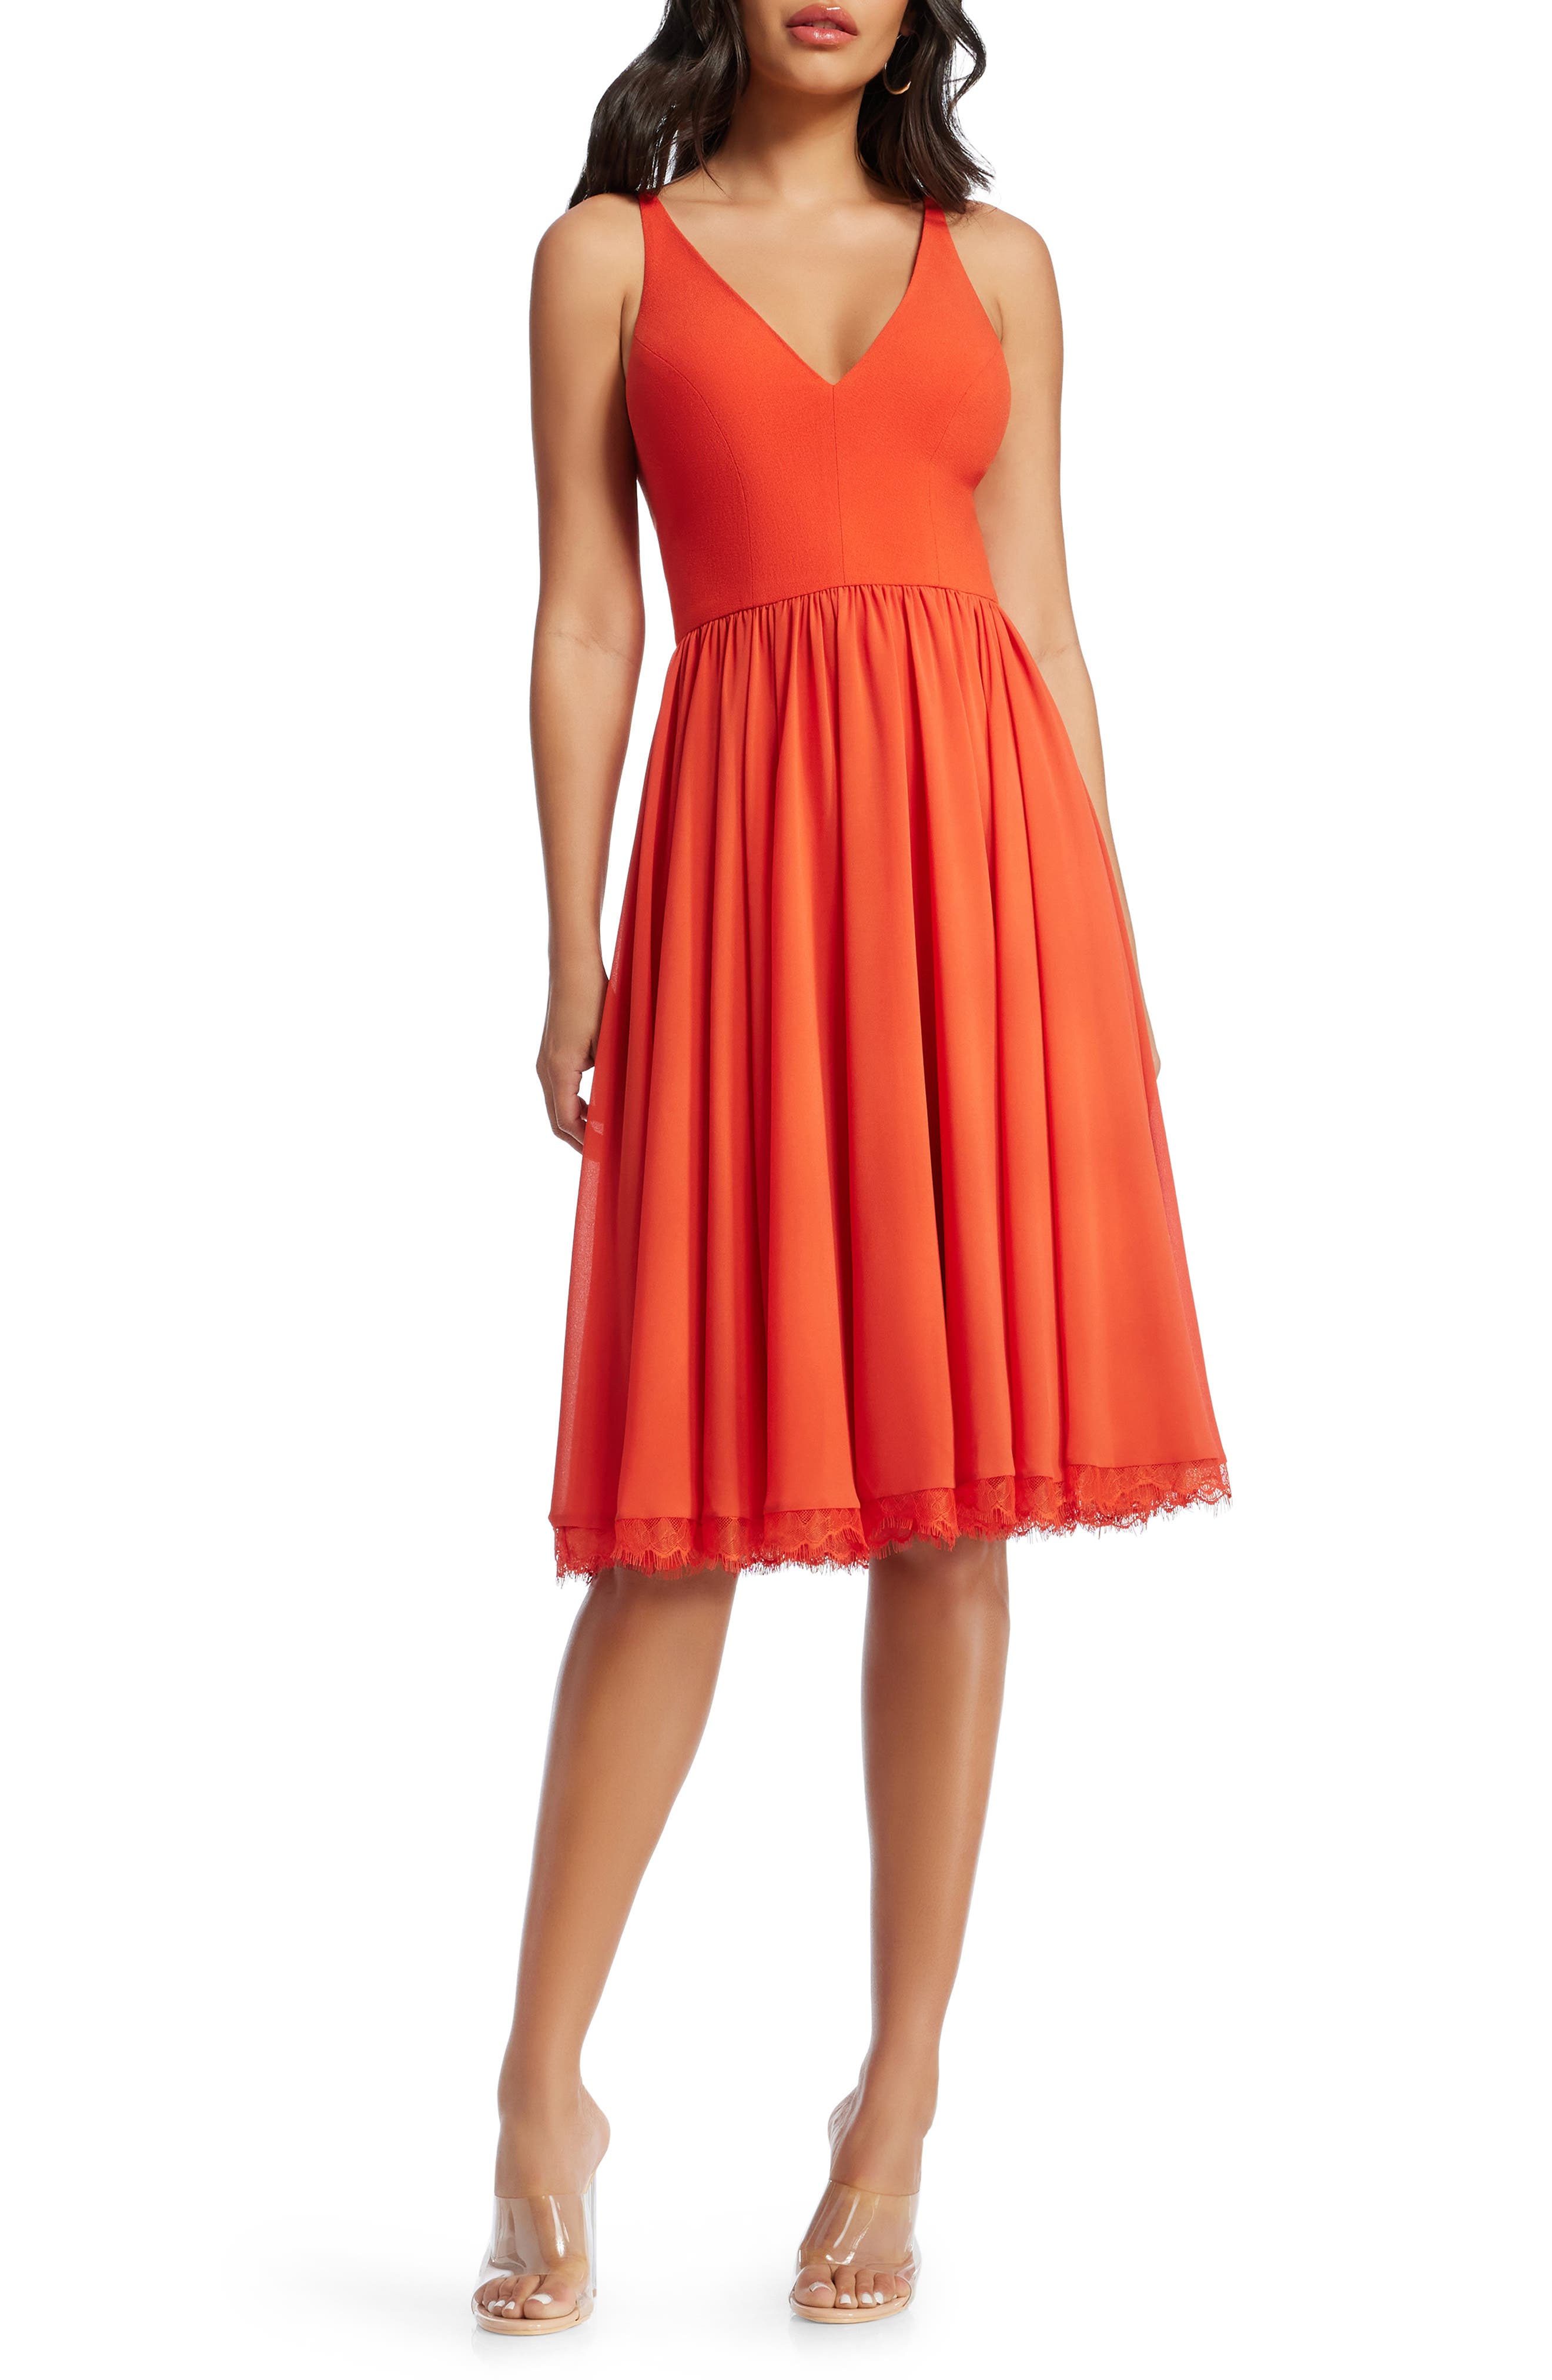 women’s orange dress